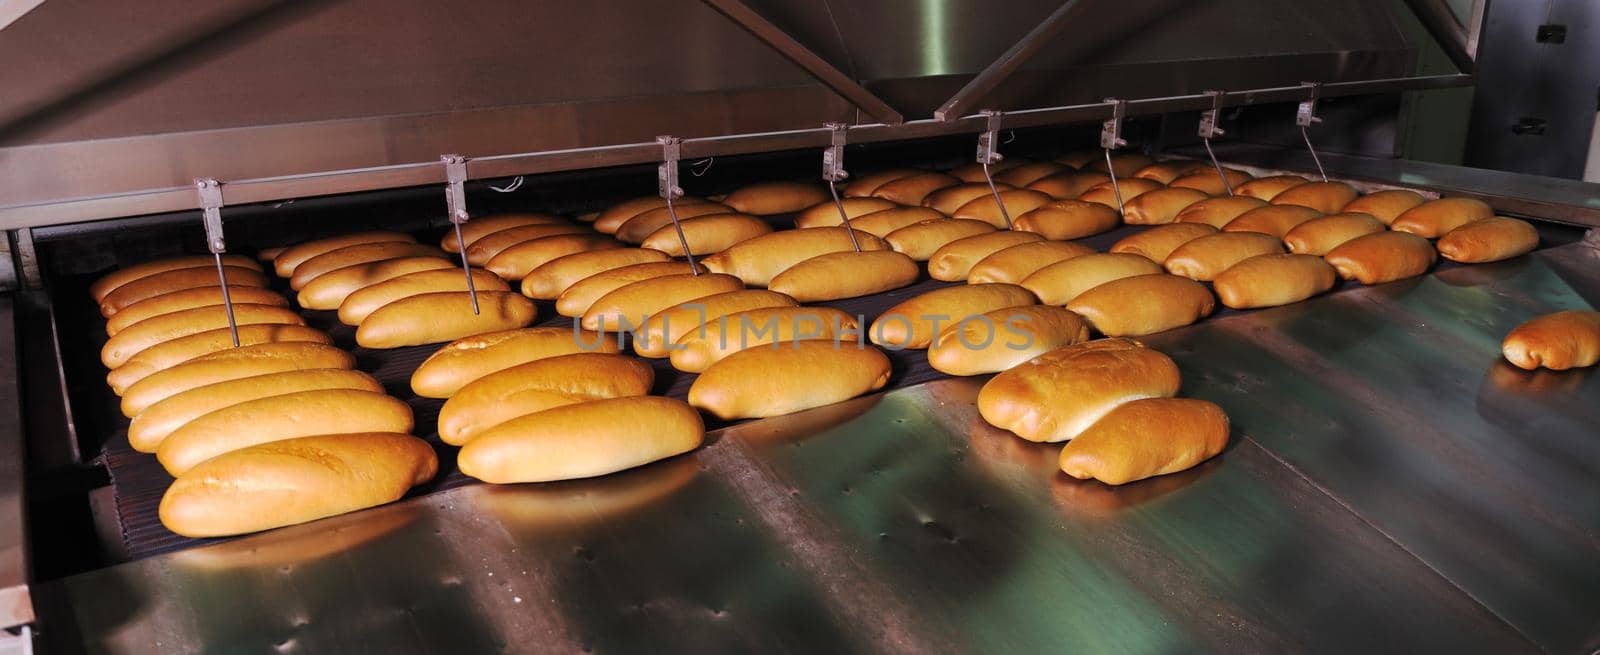 bread factory production by dotshock